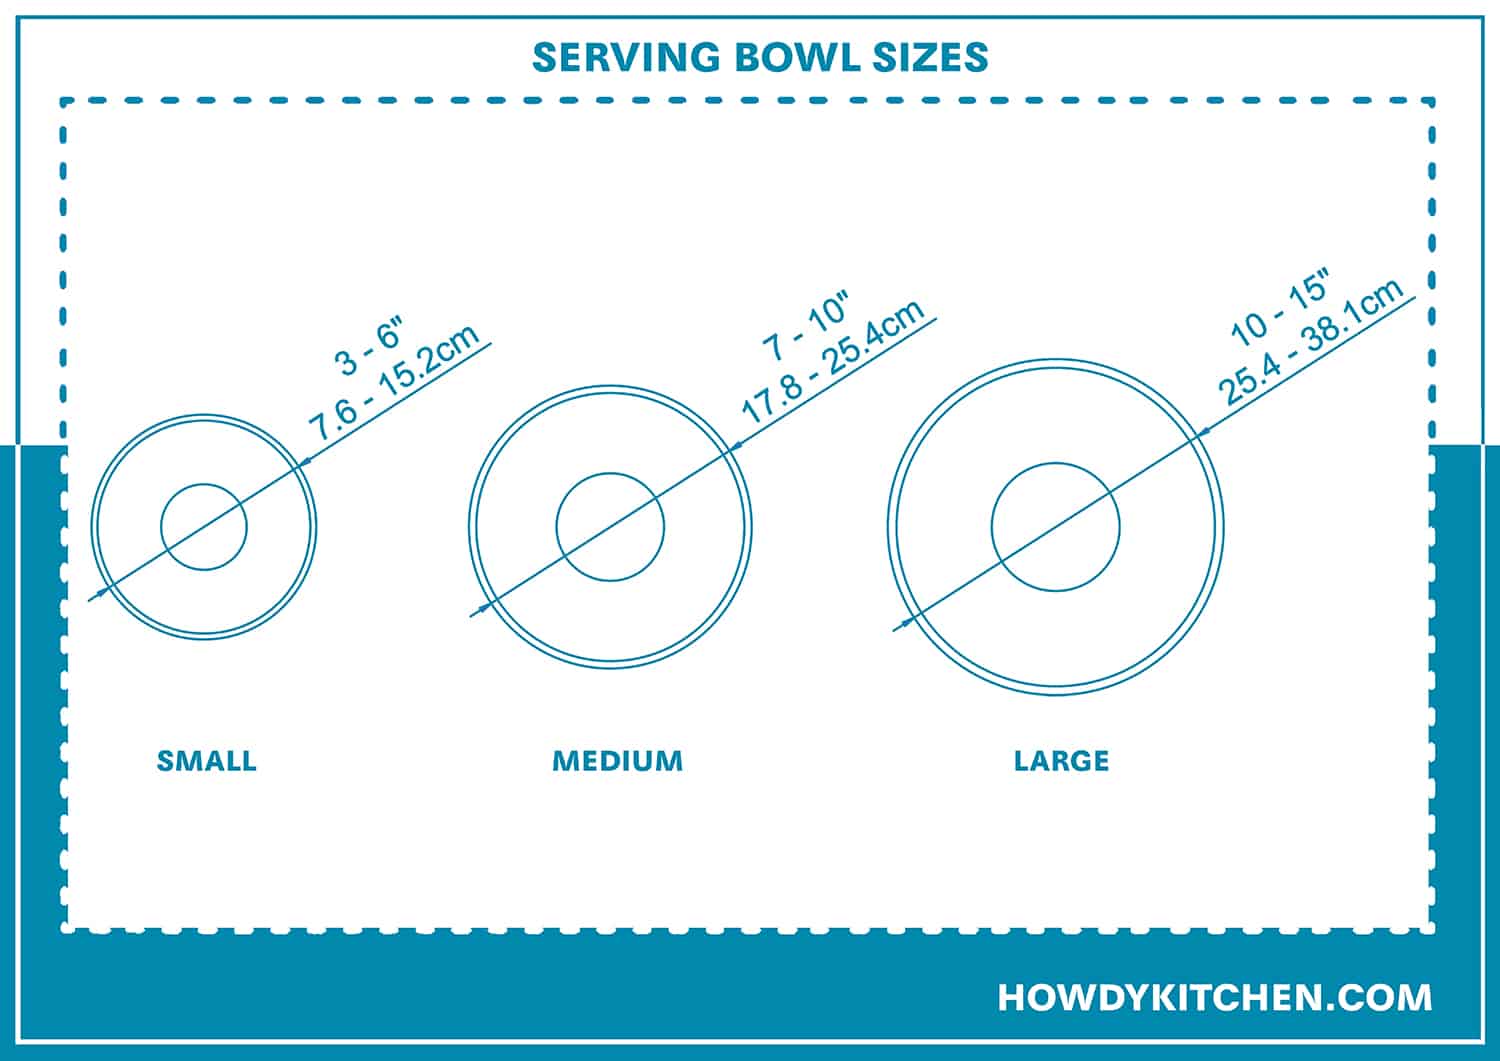 Serving Bowl Sizes